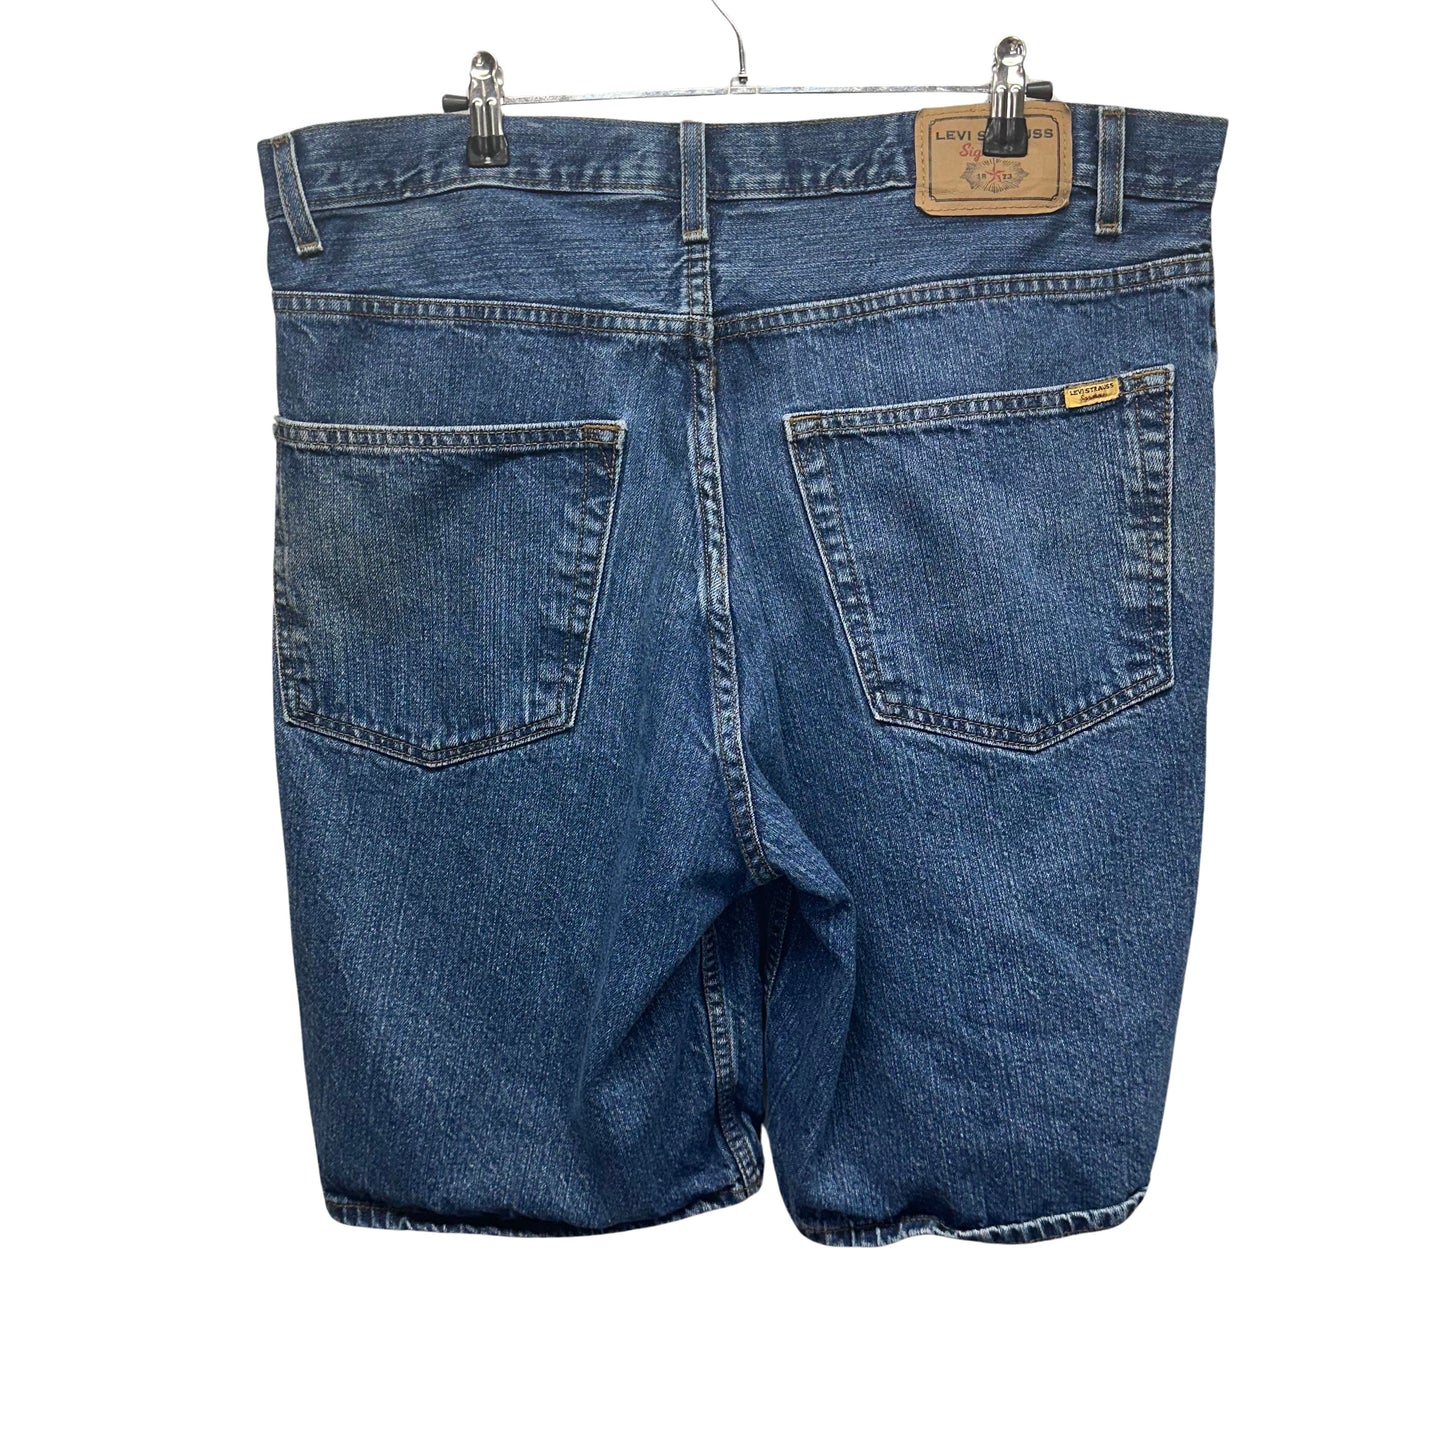 Y2K Levi’s Signature Baggy Jean Shorts Jorts Size 36